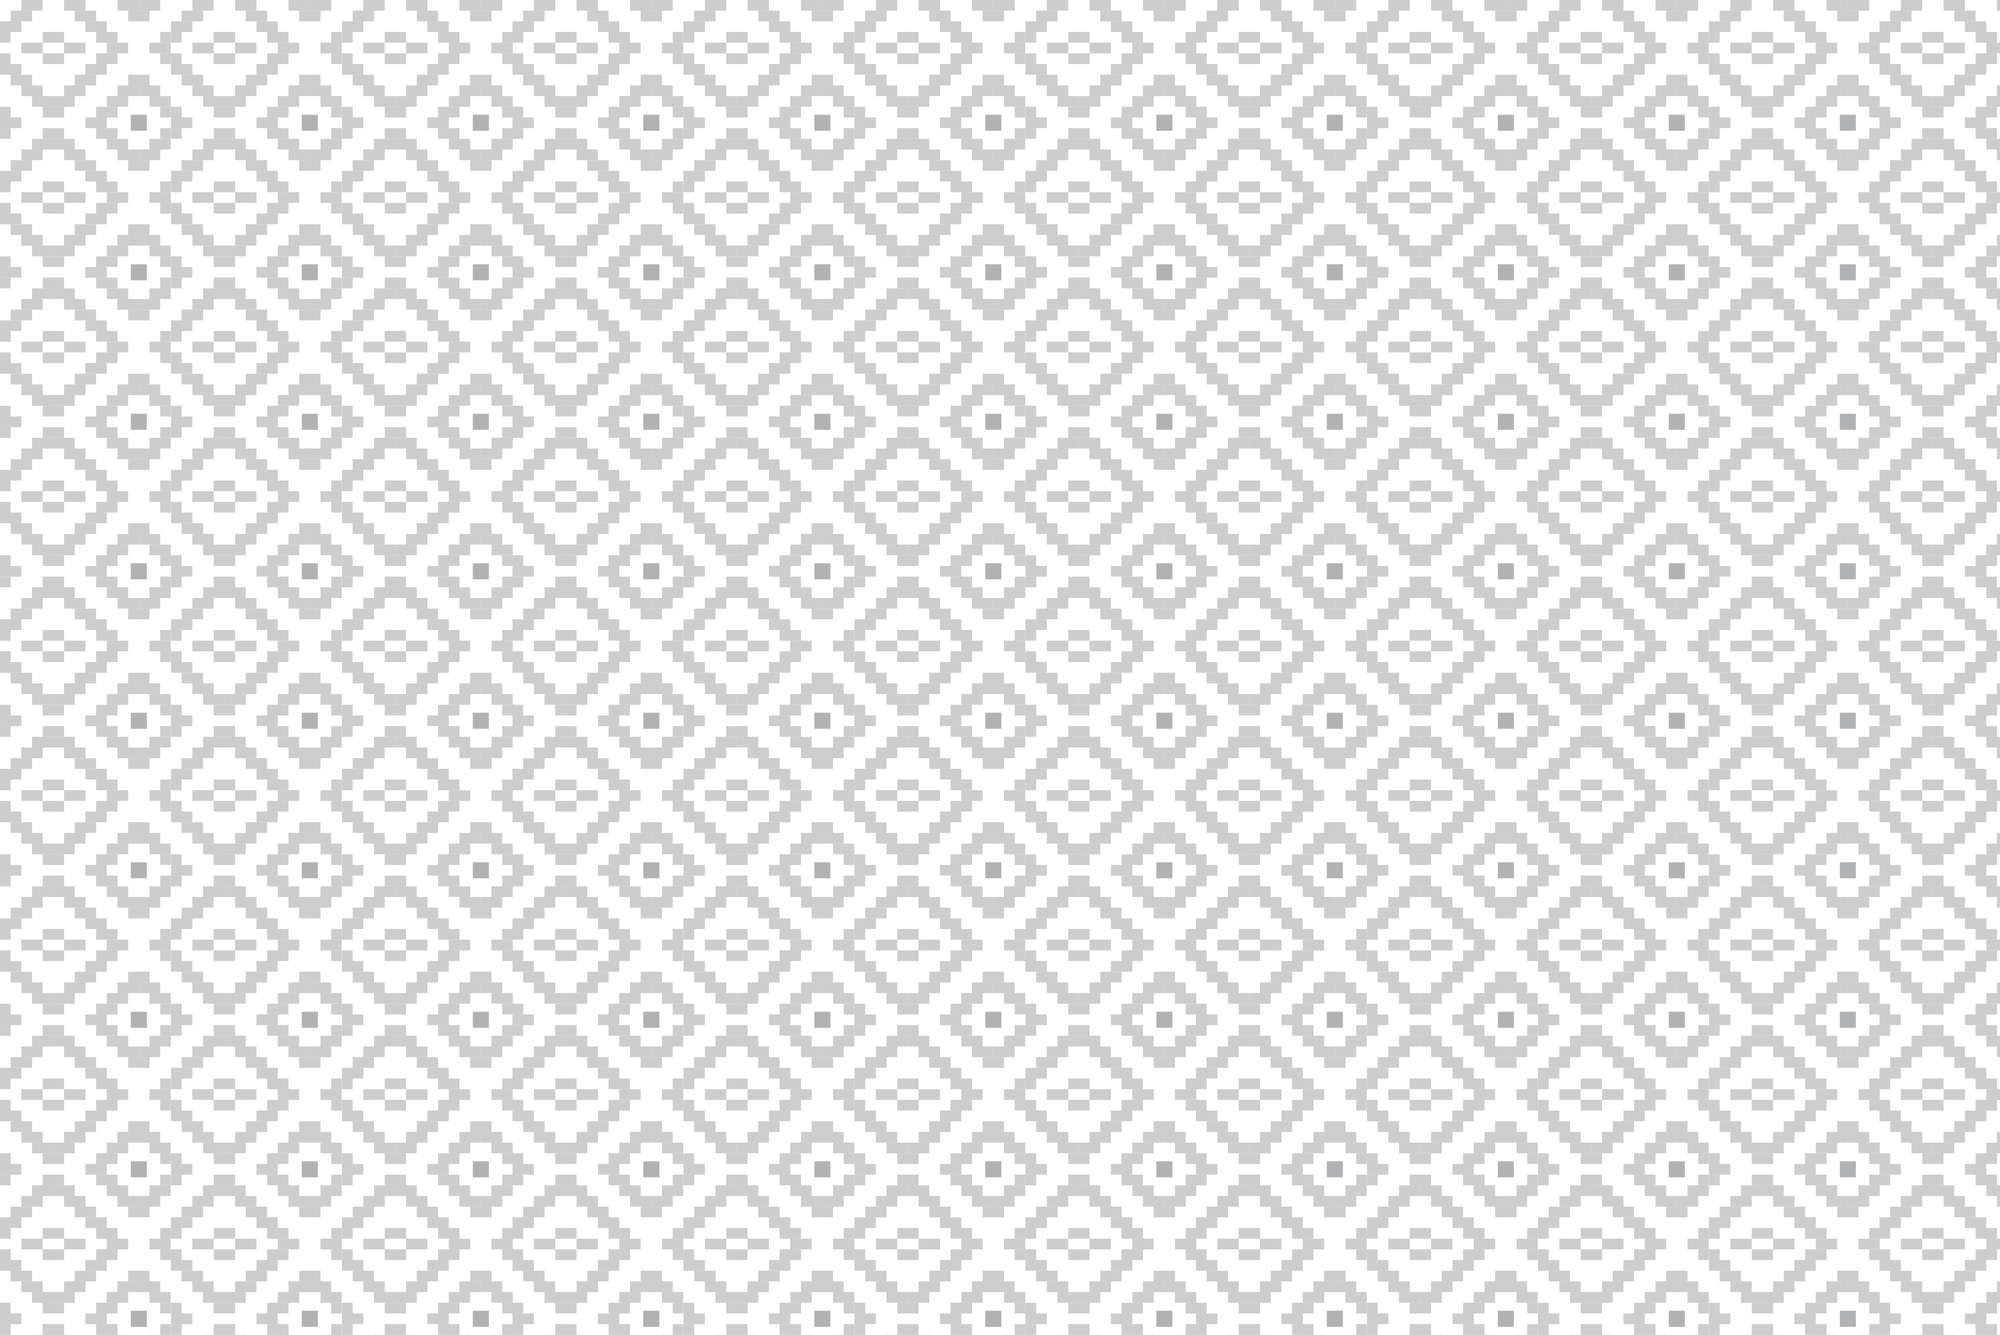             Design Fototapete kleine Quadrate mit Mustern grau auf Perlmutt Glattvlies
        